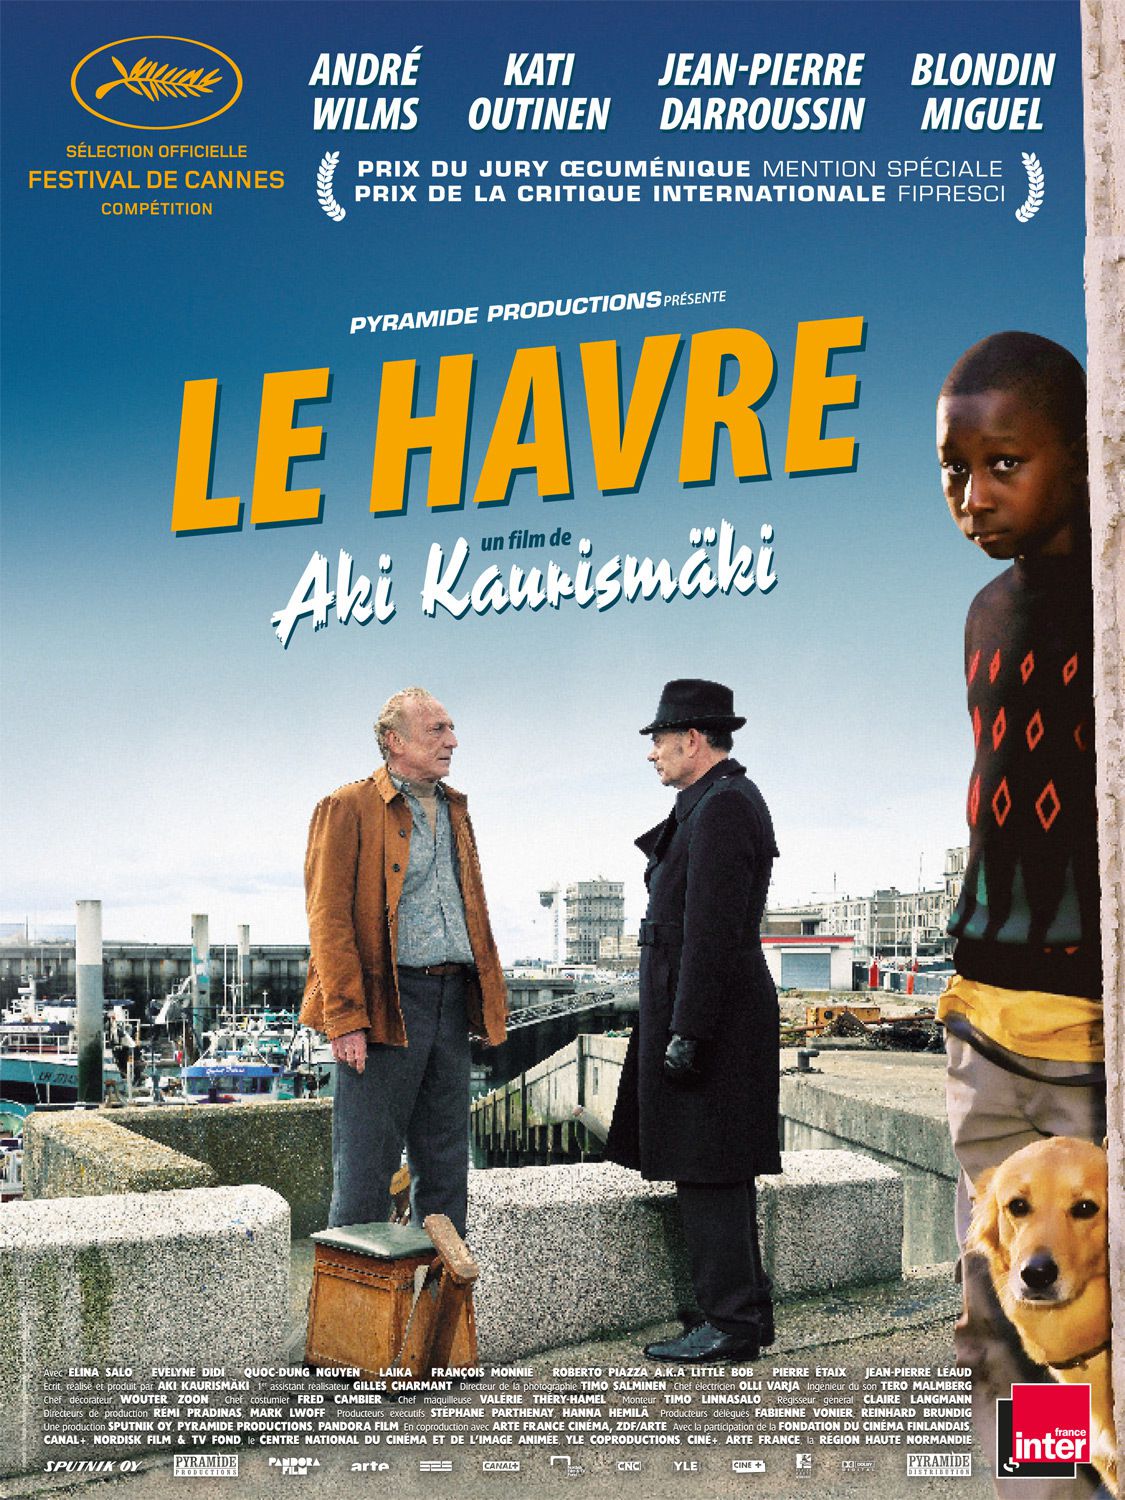 Le Havre - Film (2011) streaming VF gratuit complet